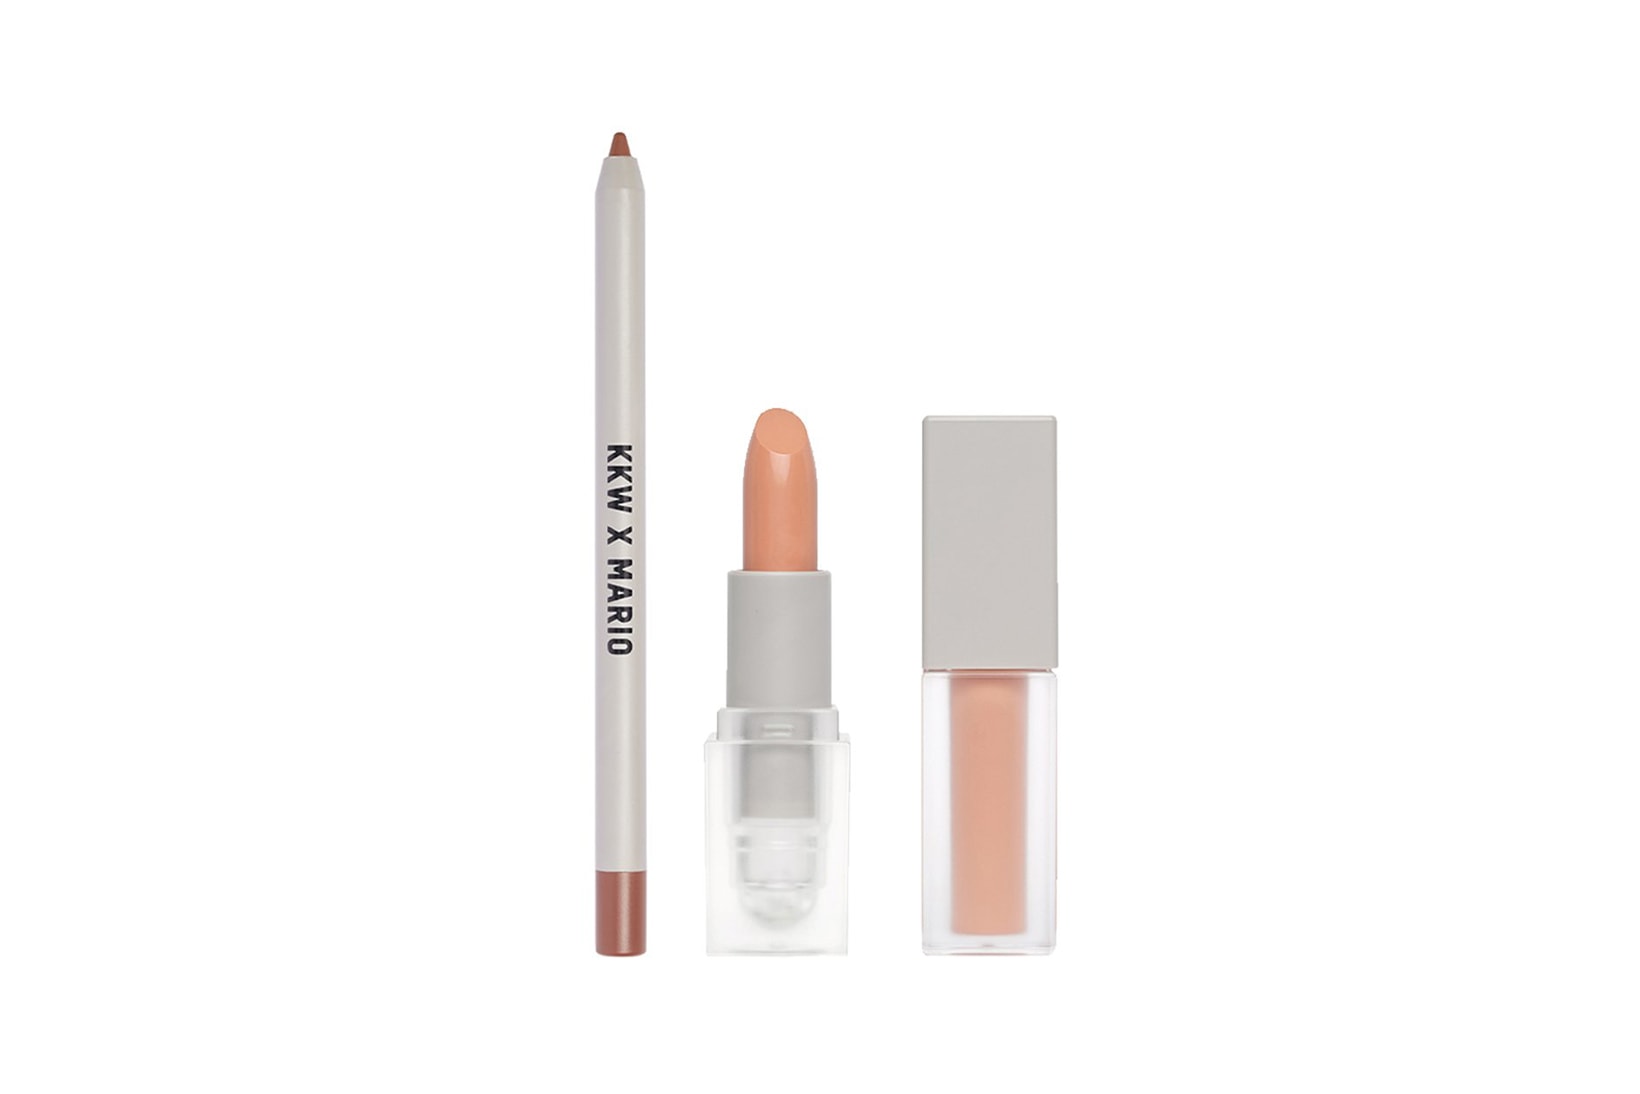 kim kardashian makeup by mario kkw beauty second collection lip liner lipstick lip gloss peach nude